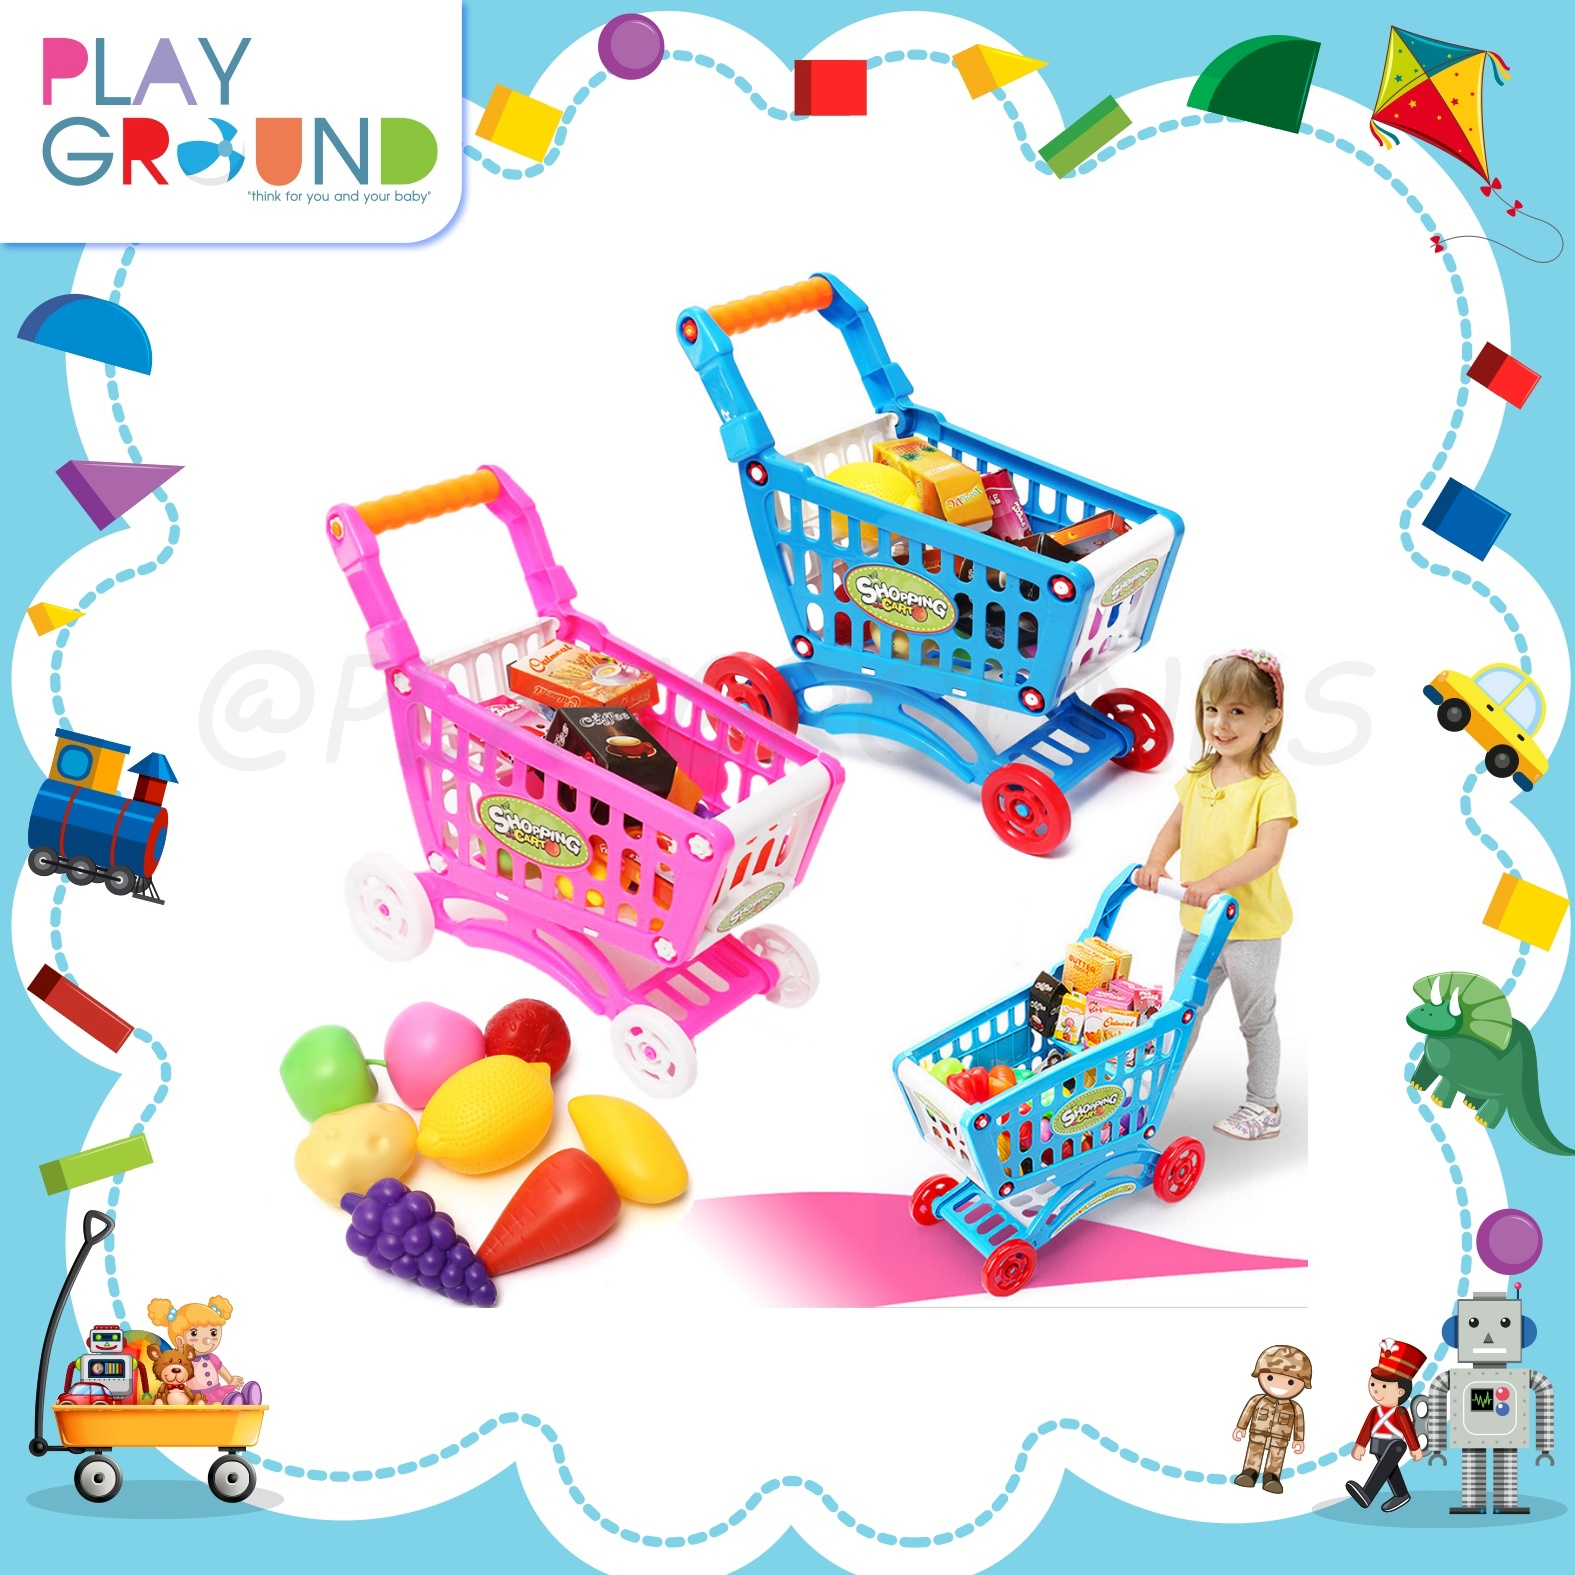 Playground รถเข็นอาหาร Shopping Cart and food play set ช่วยเสริมพัฒนาการเด็กๆ ให้เกิดความคิดสร้างสรรค์และจินตนาการ